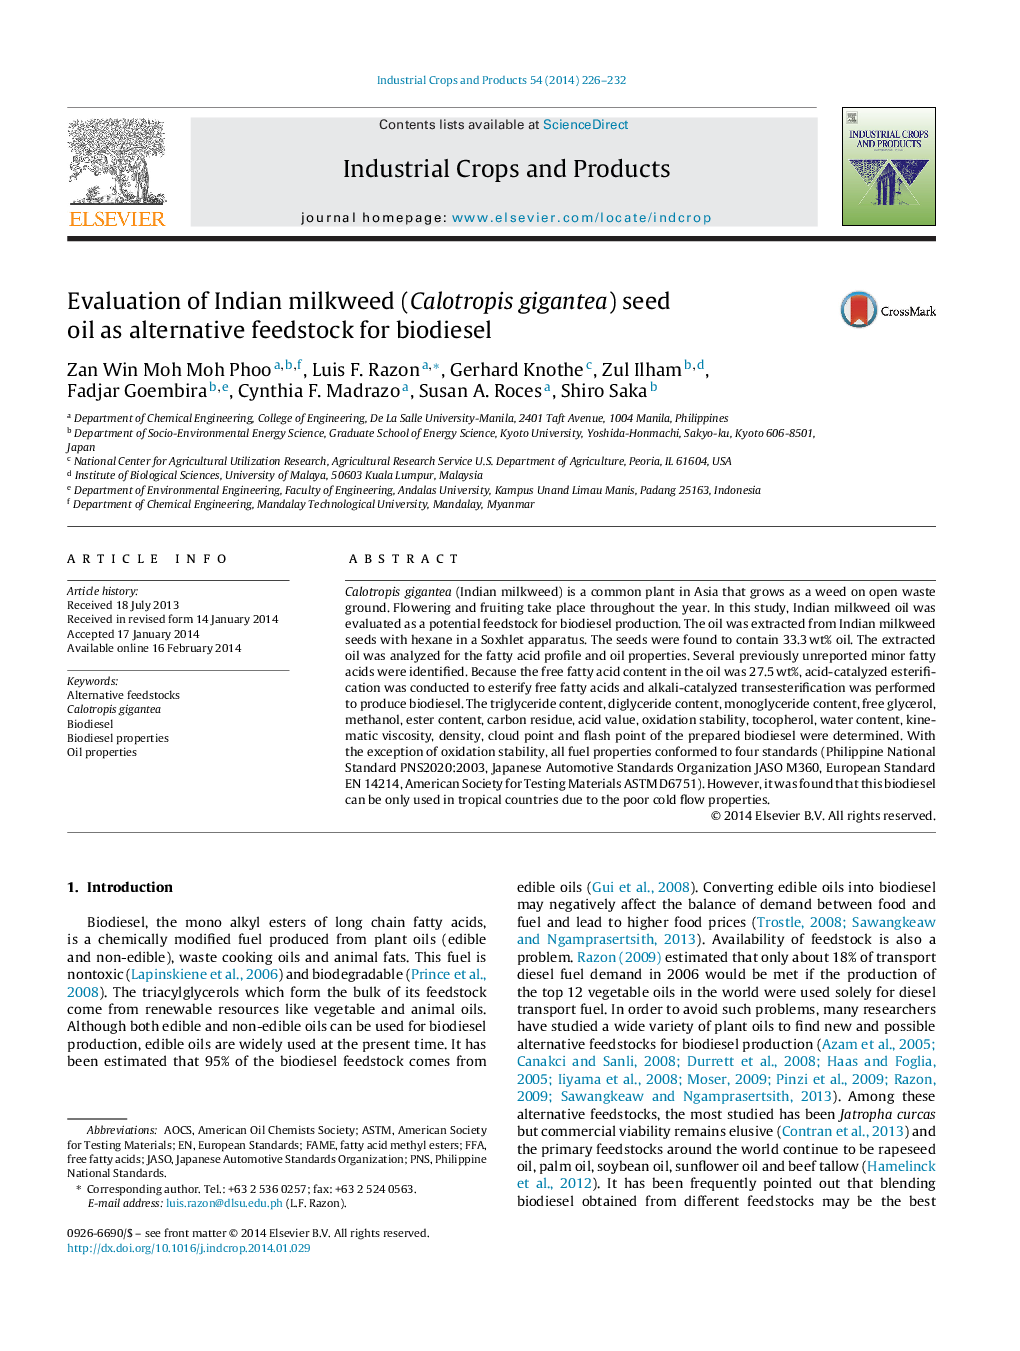 Evaluation of Indian milkweed (Calotropis gigantea) seed oil as alternative feedstock for biodiesel